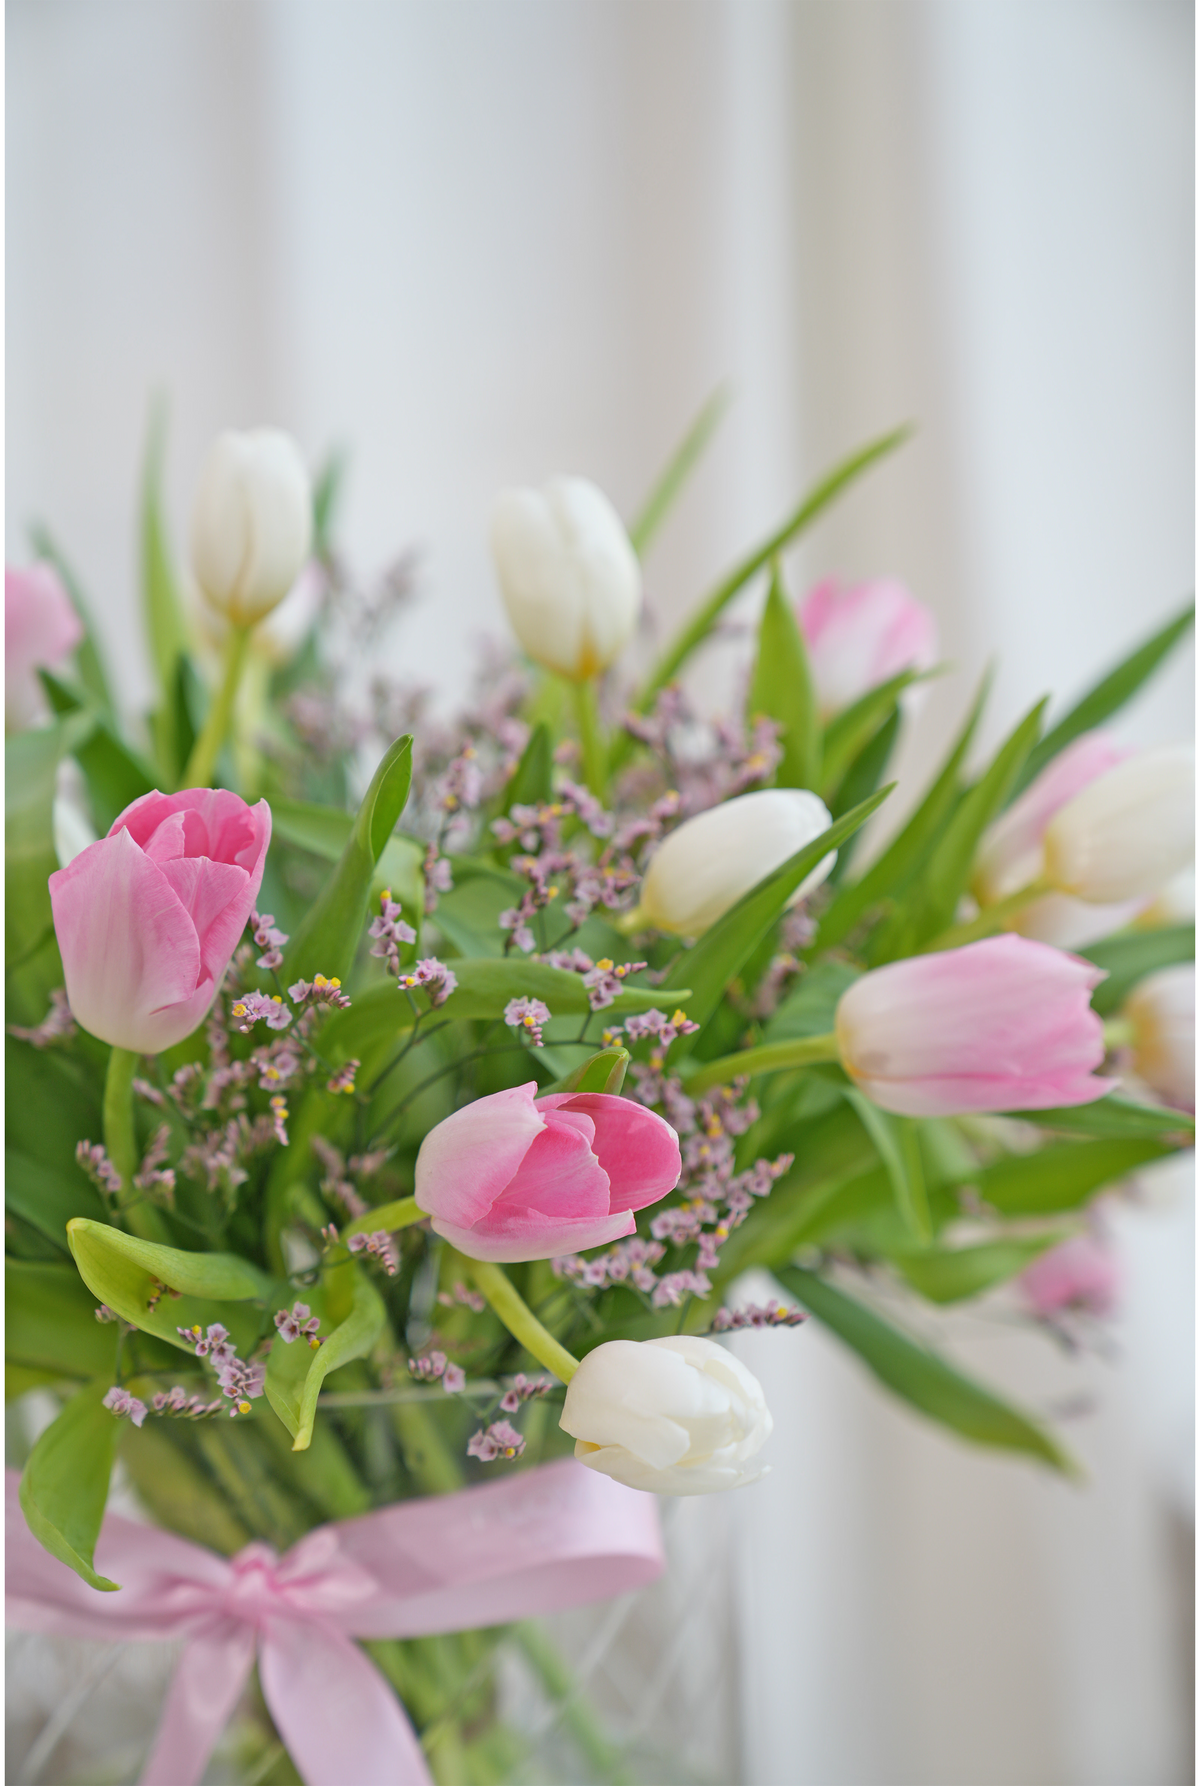 Luxury Pink and White Tulips - Vase (Free Crispy Hearts)